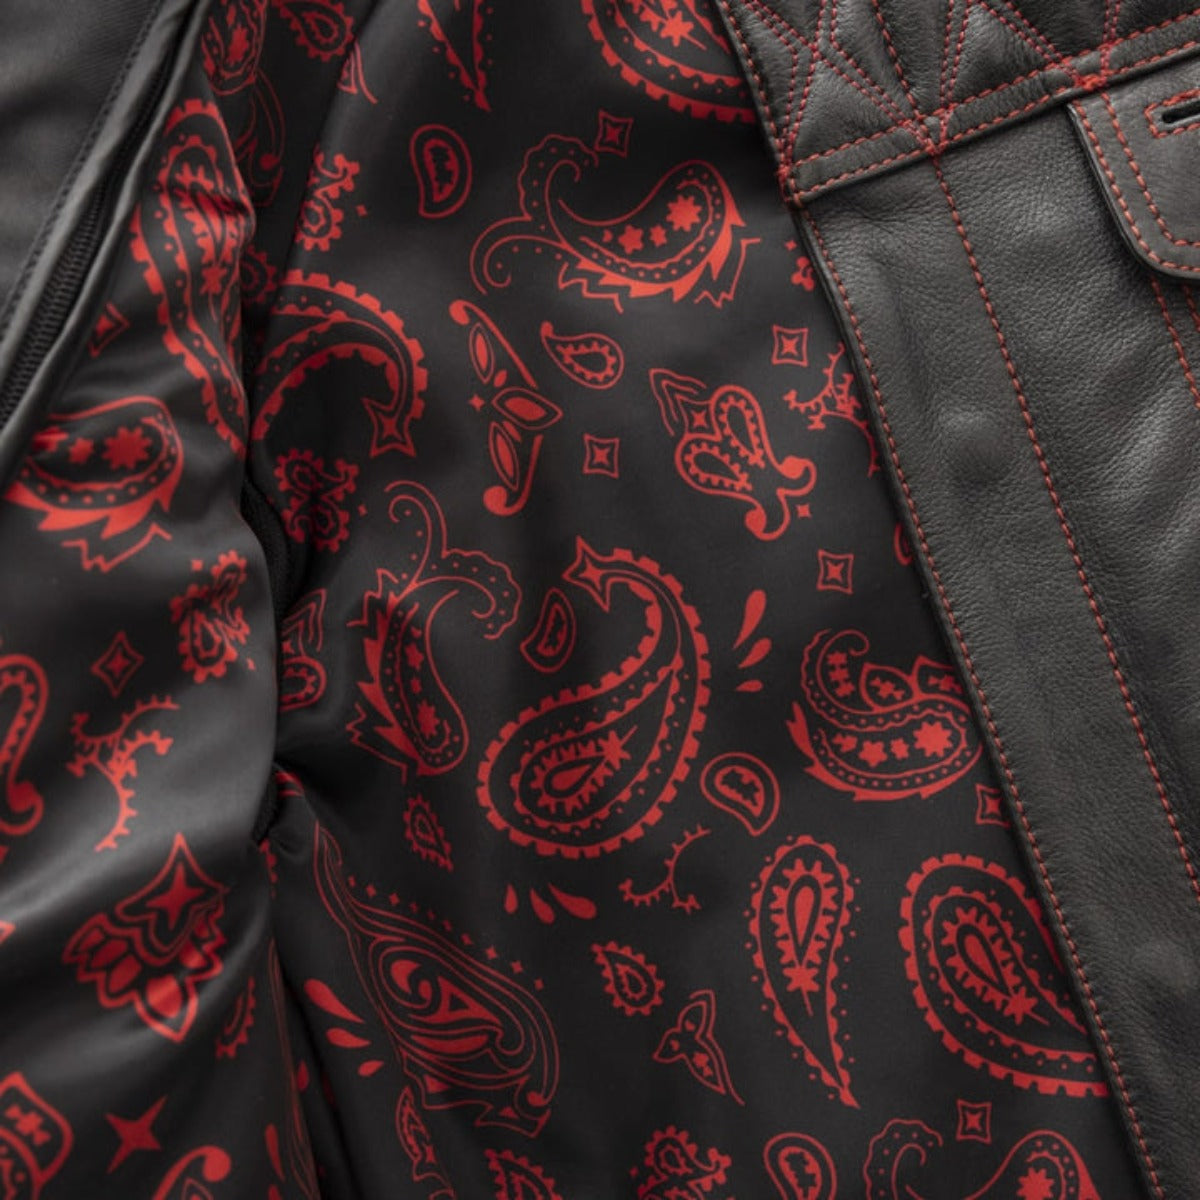 First Manufacturing Cinder - Men's Cafe Style Leather Jacket, Black/Red